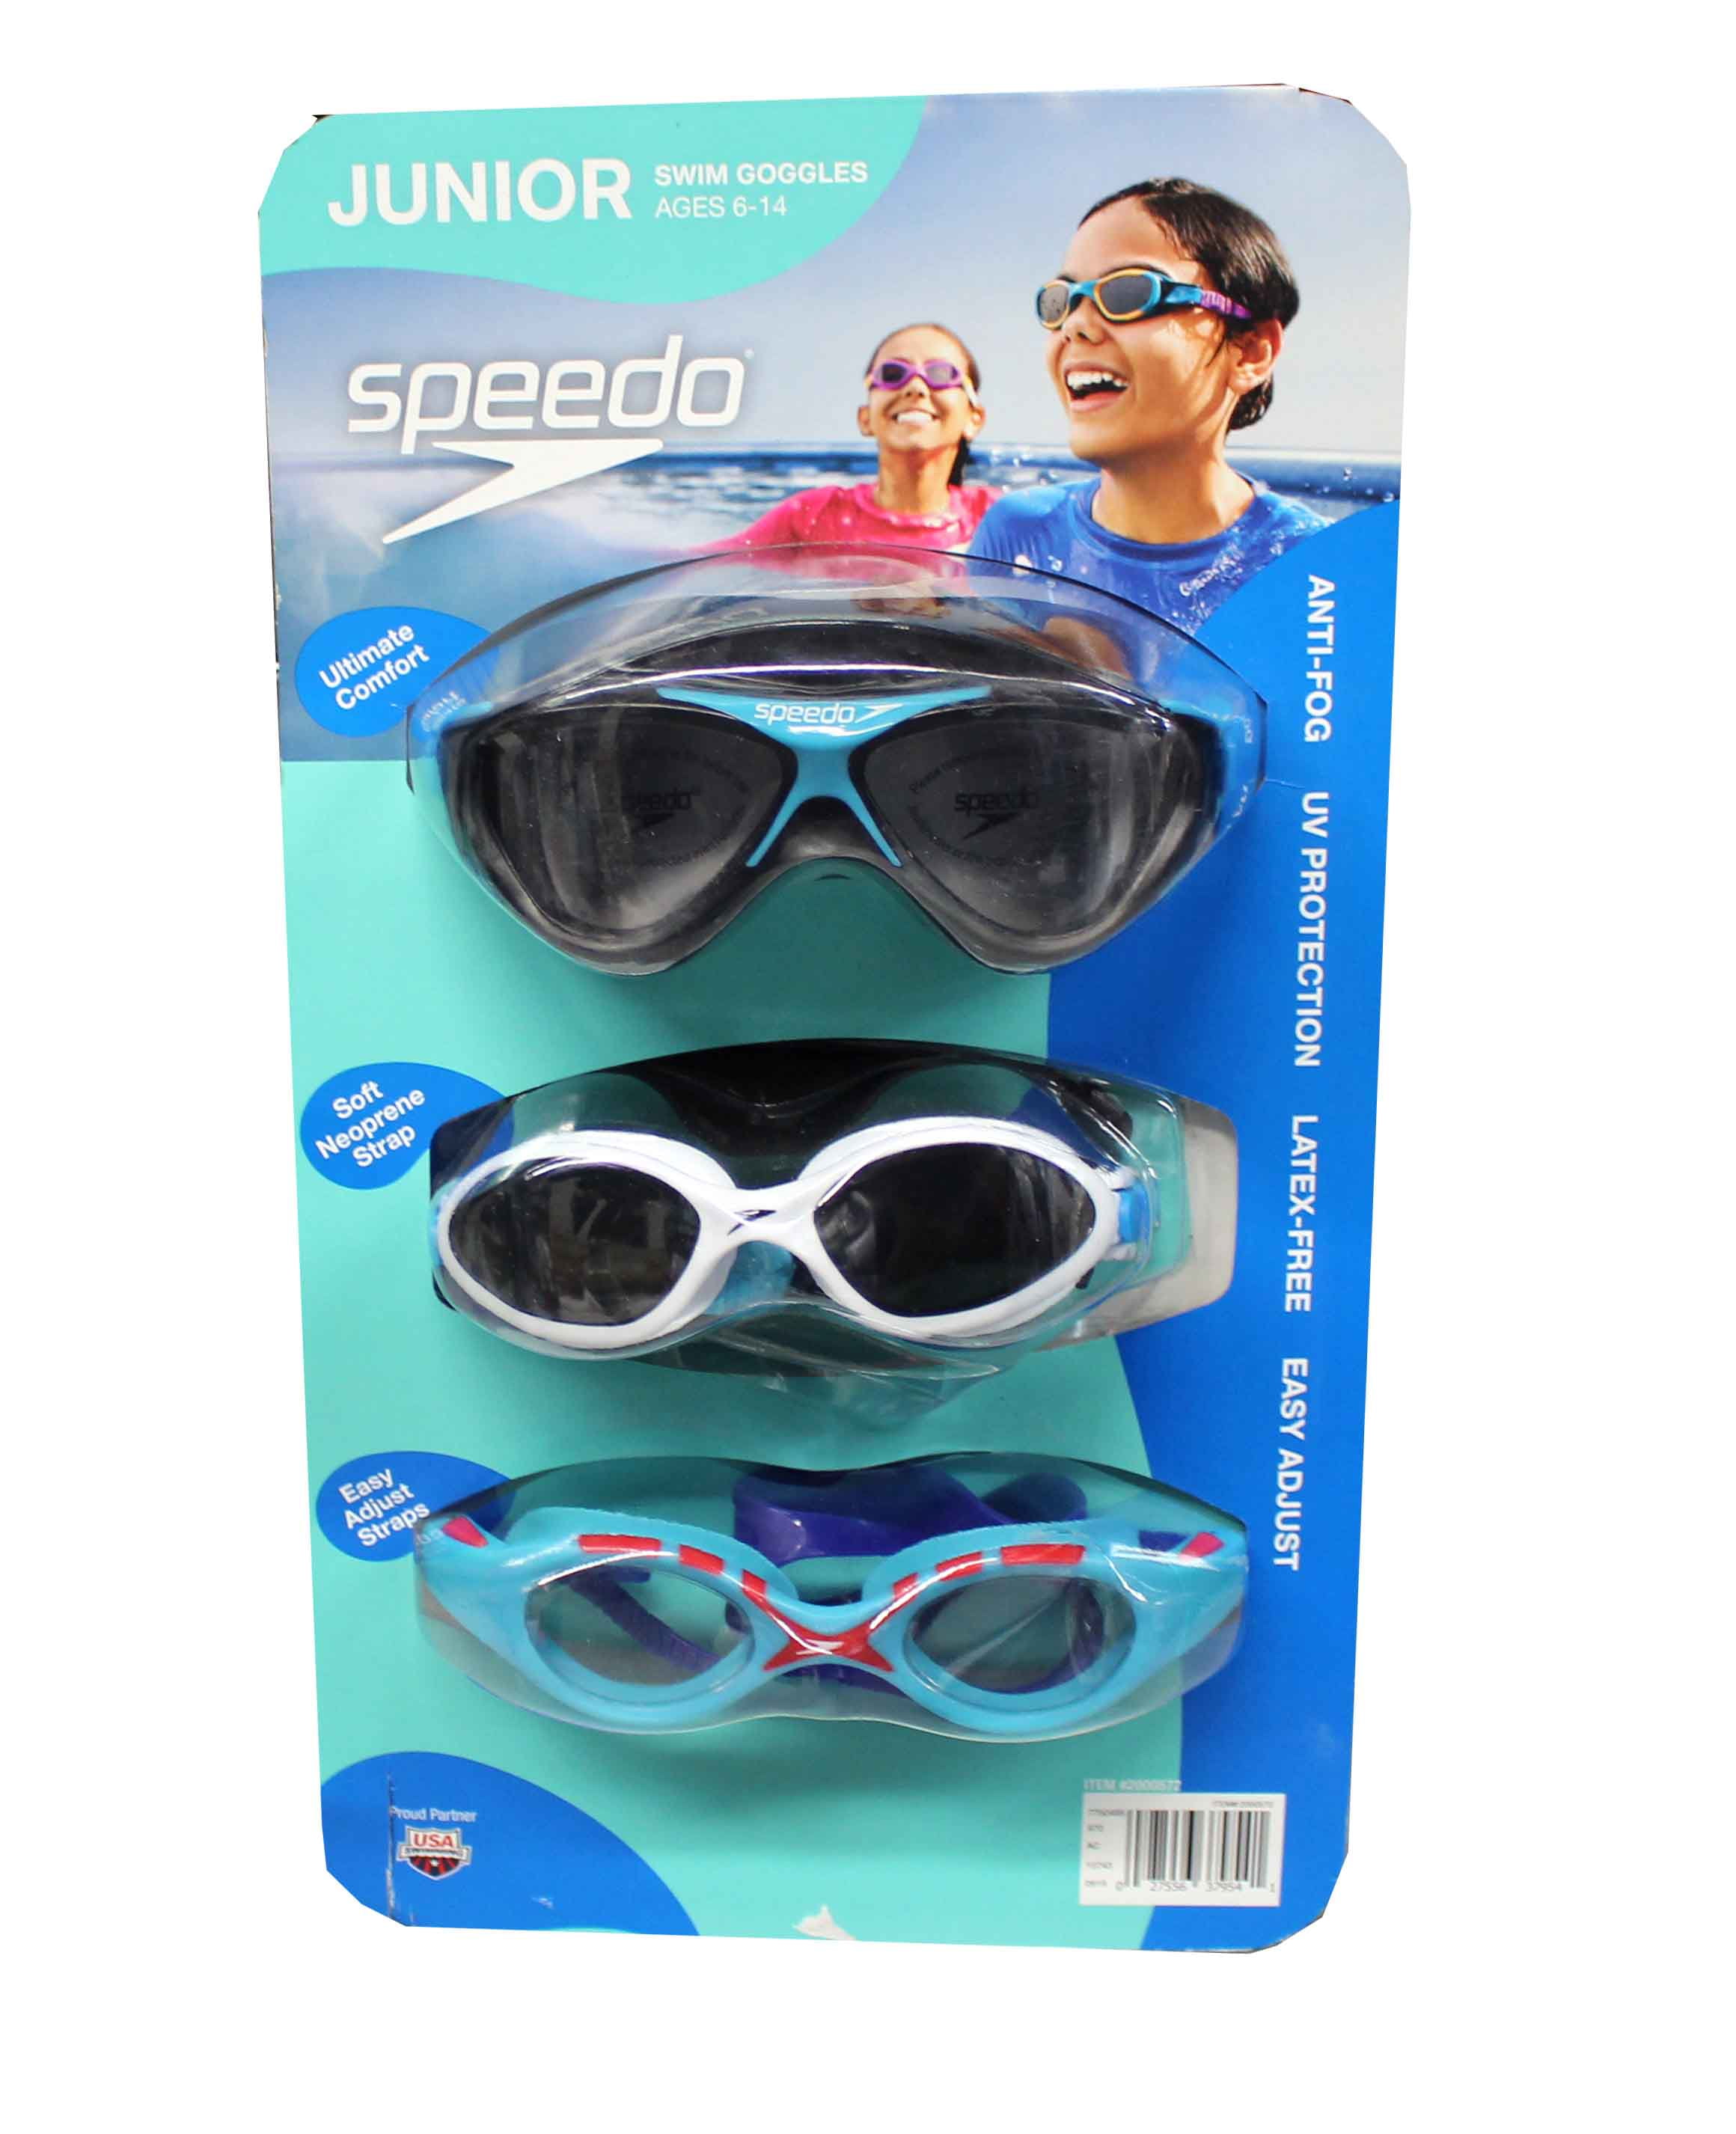 Speedo 1426326 Junior Swim Goggles Ages 6 to 14 Pack of 3 One Pair New! 